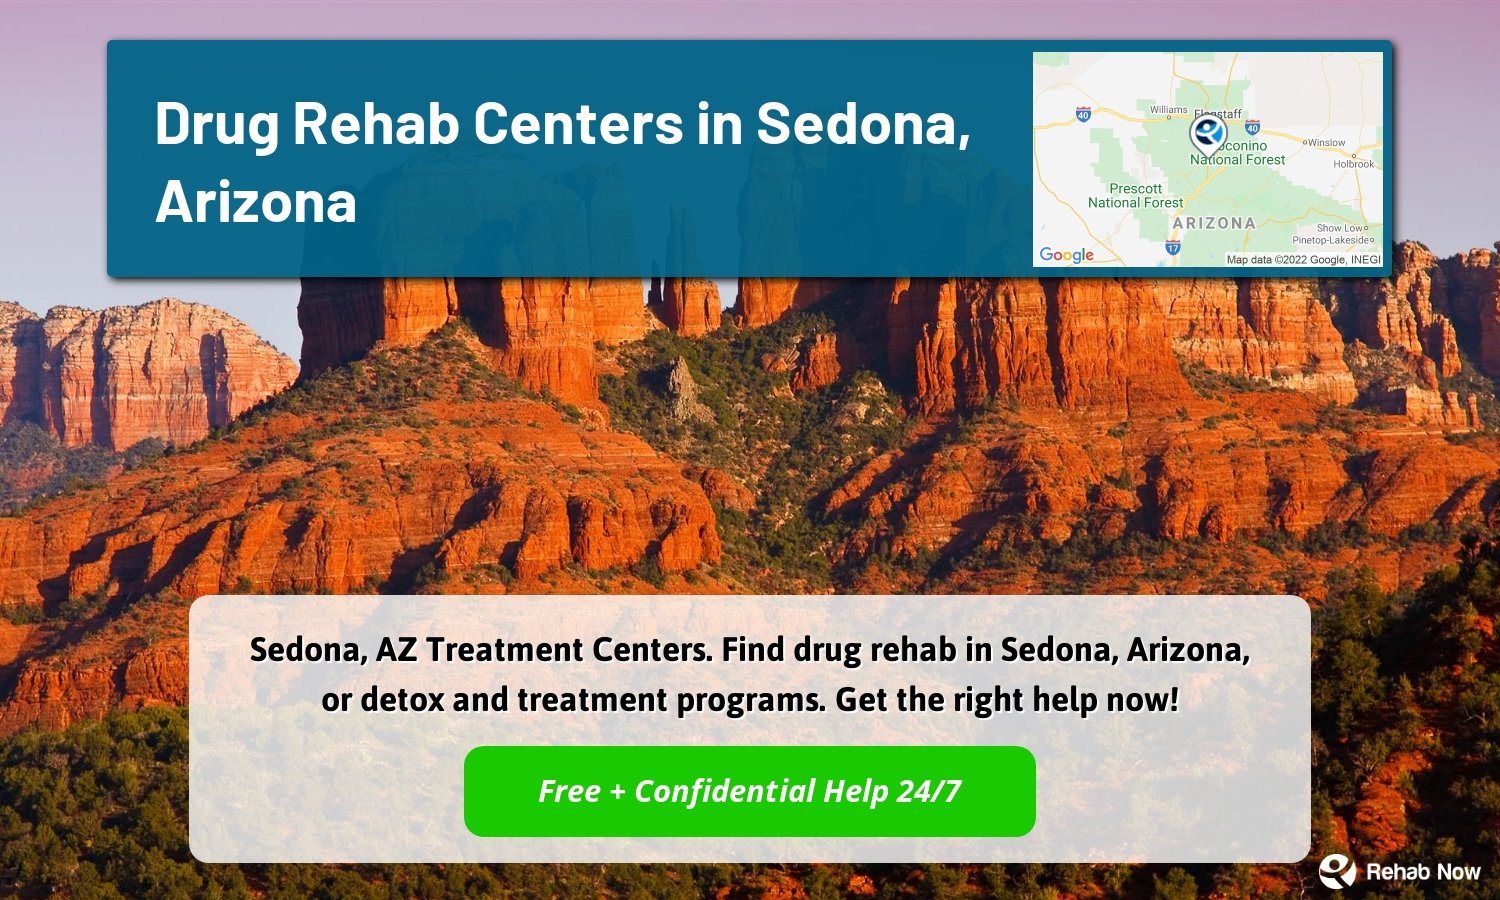 Sedona, AZ Treatment Centers. Find drug rehab in Sedona, Arizona, or detox and treatment programs. Get the right help now!